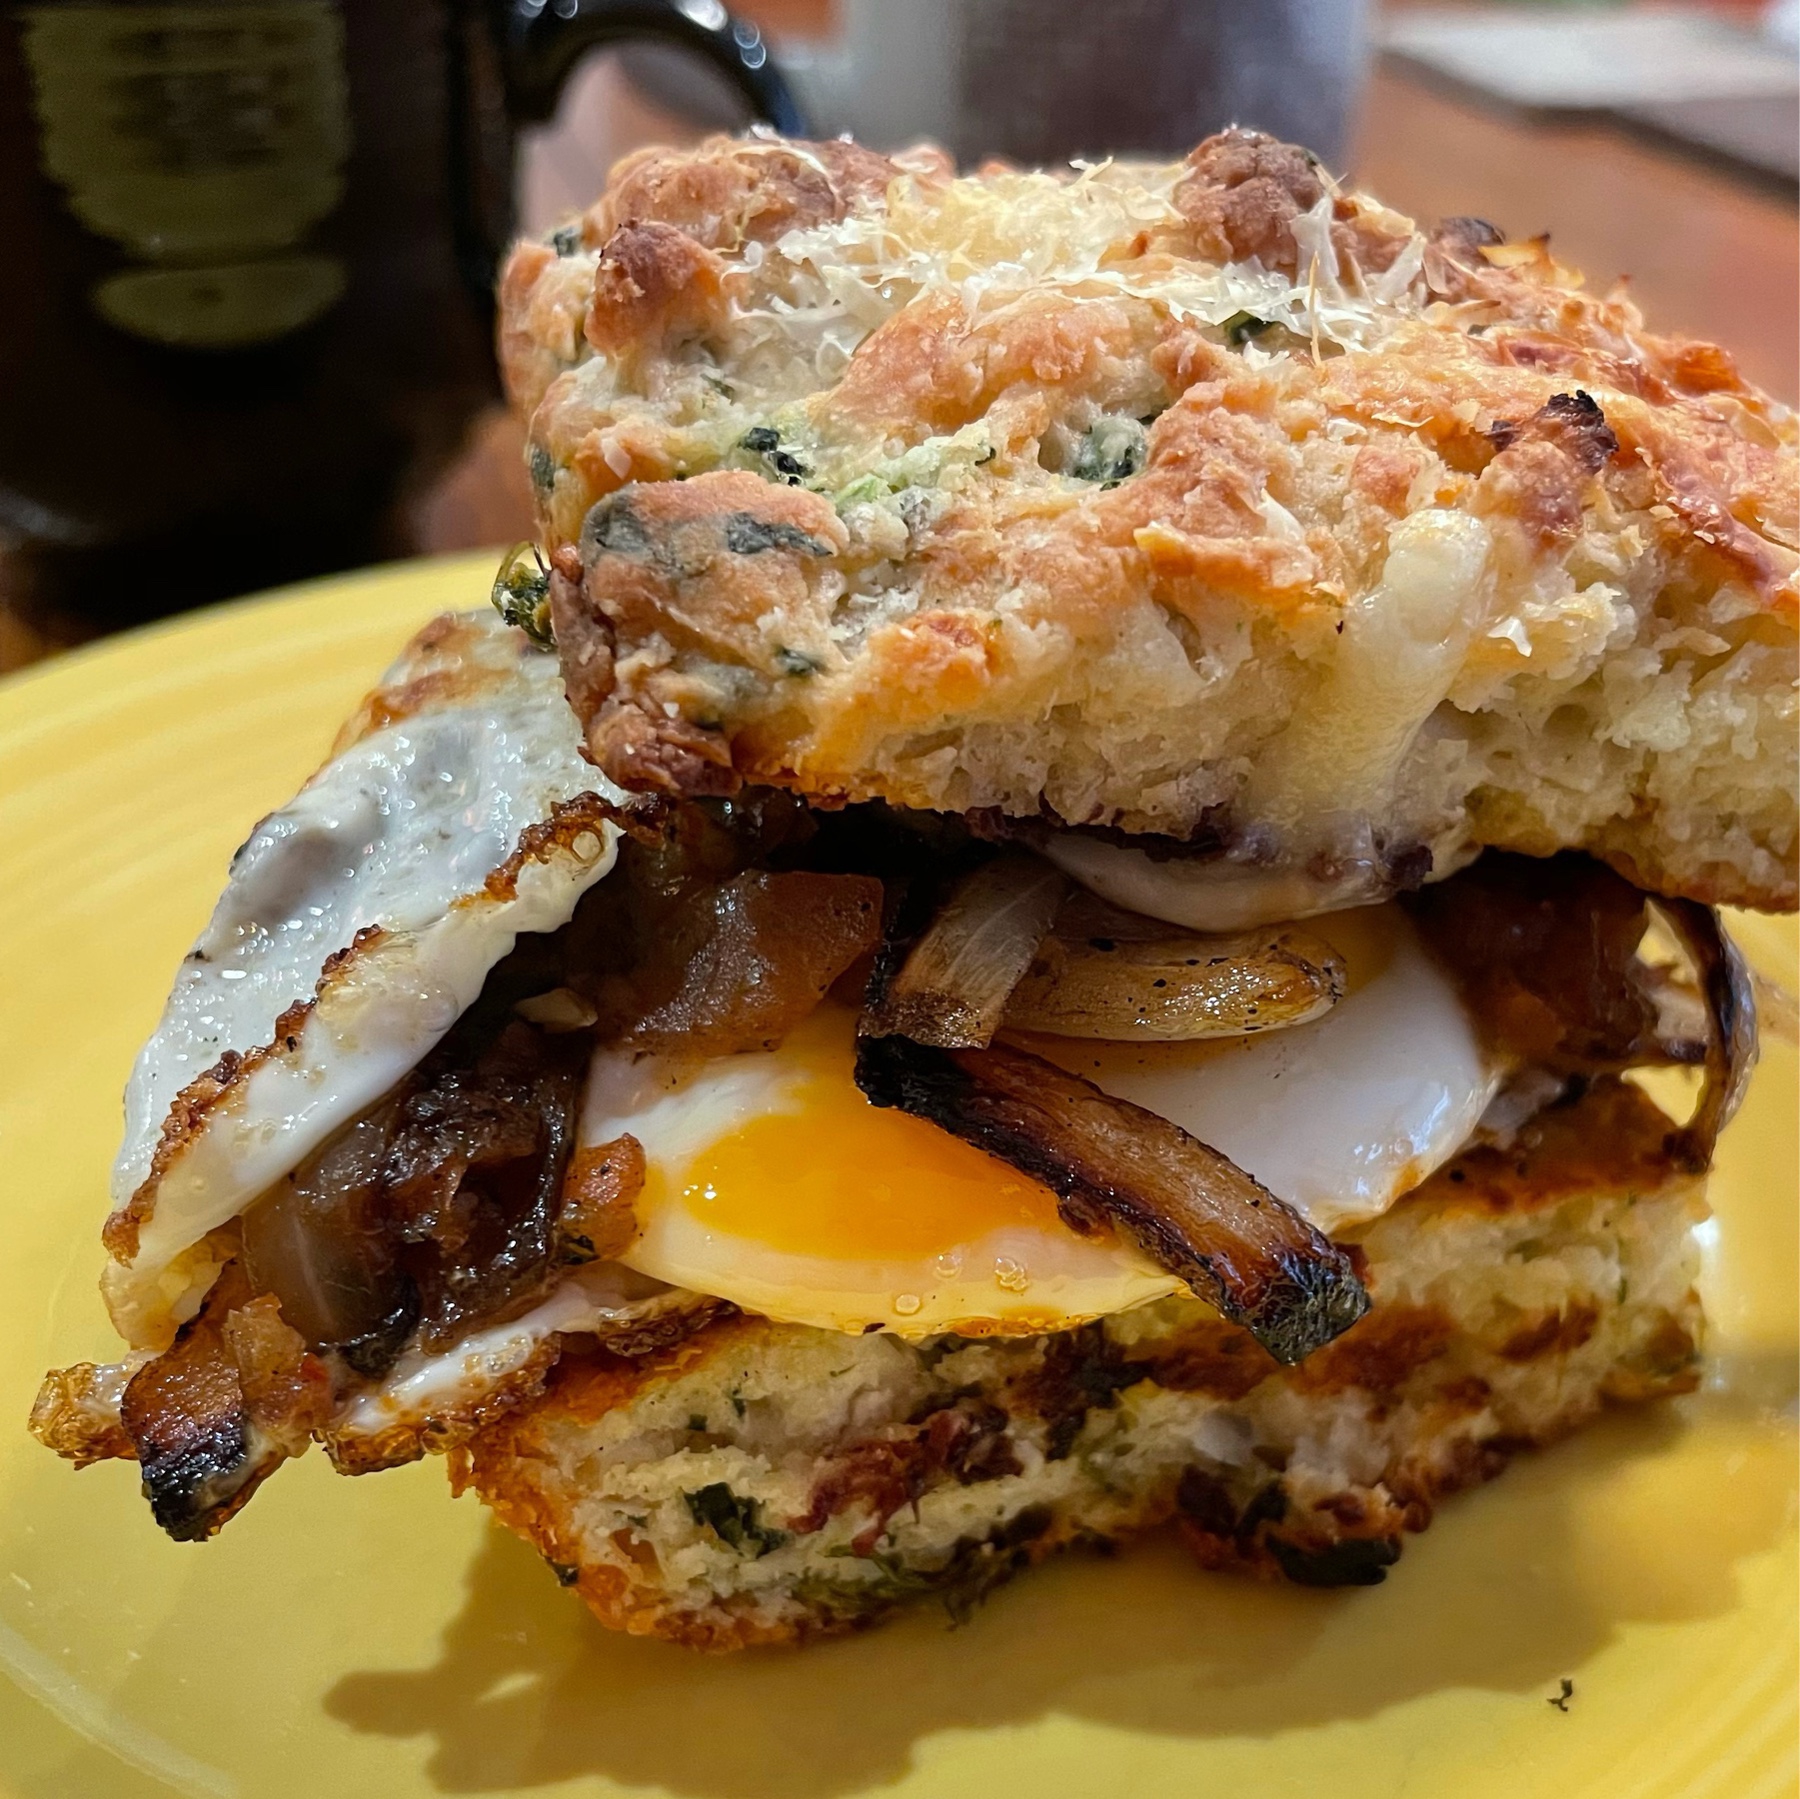 A messy breakfast sandwich on a yelliw plate.